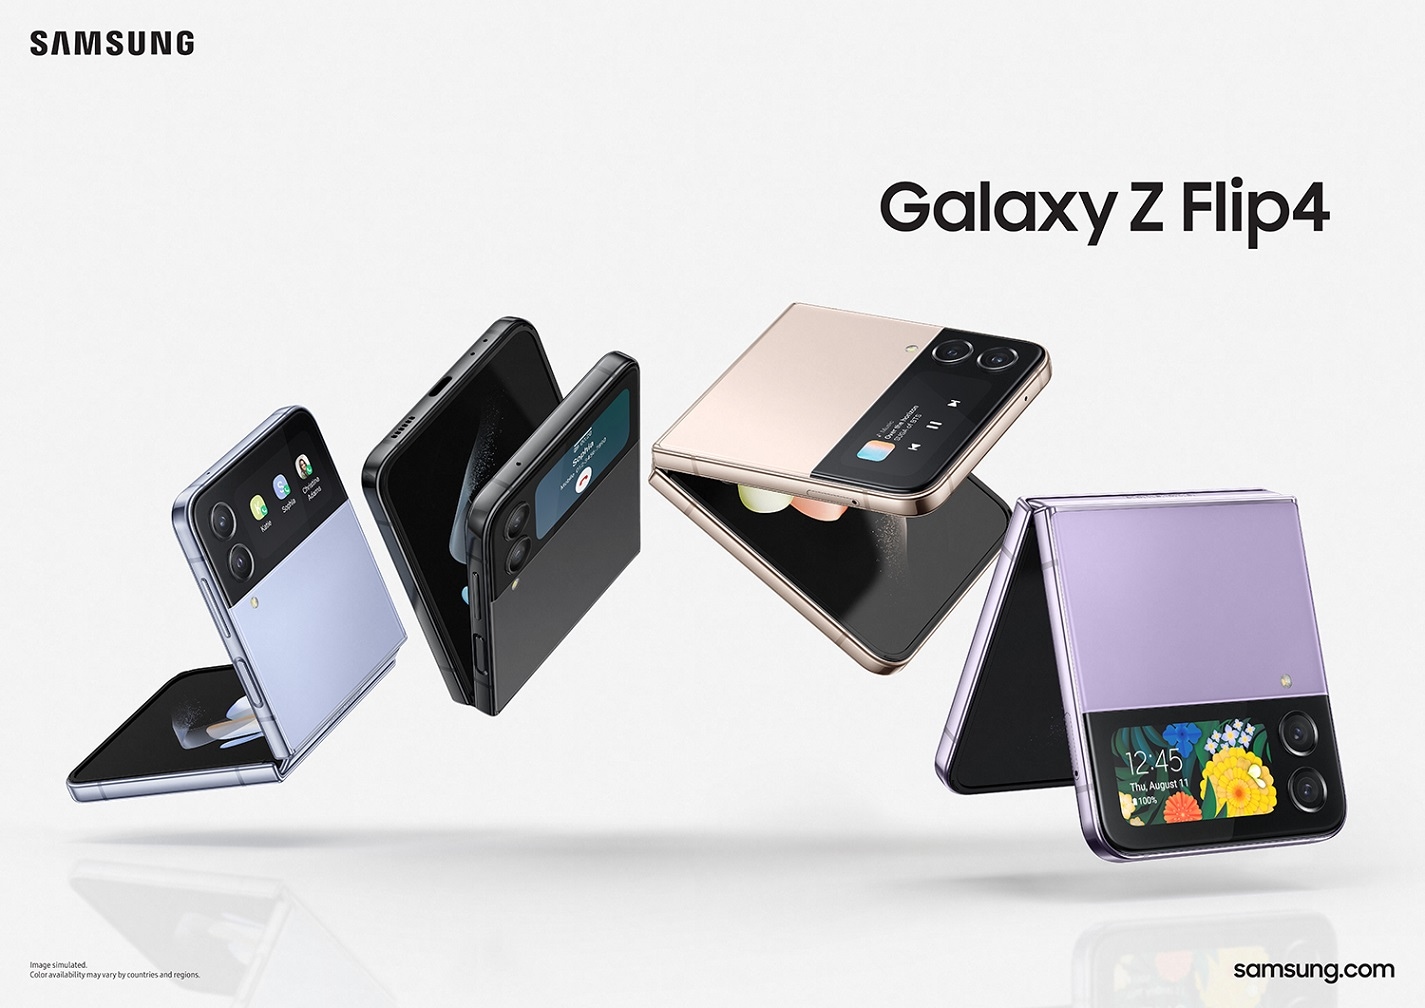 Introducing Samsung Galaxy Z Flip4 and Galaxy Z Fold4: The Most